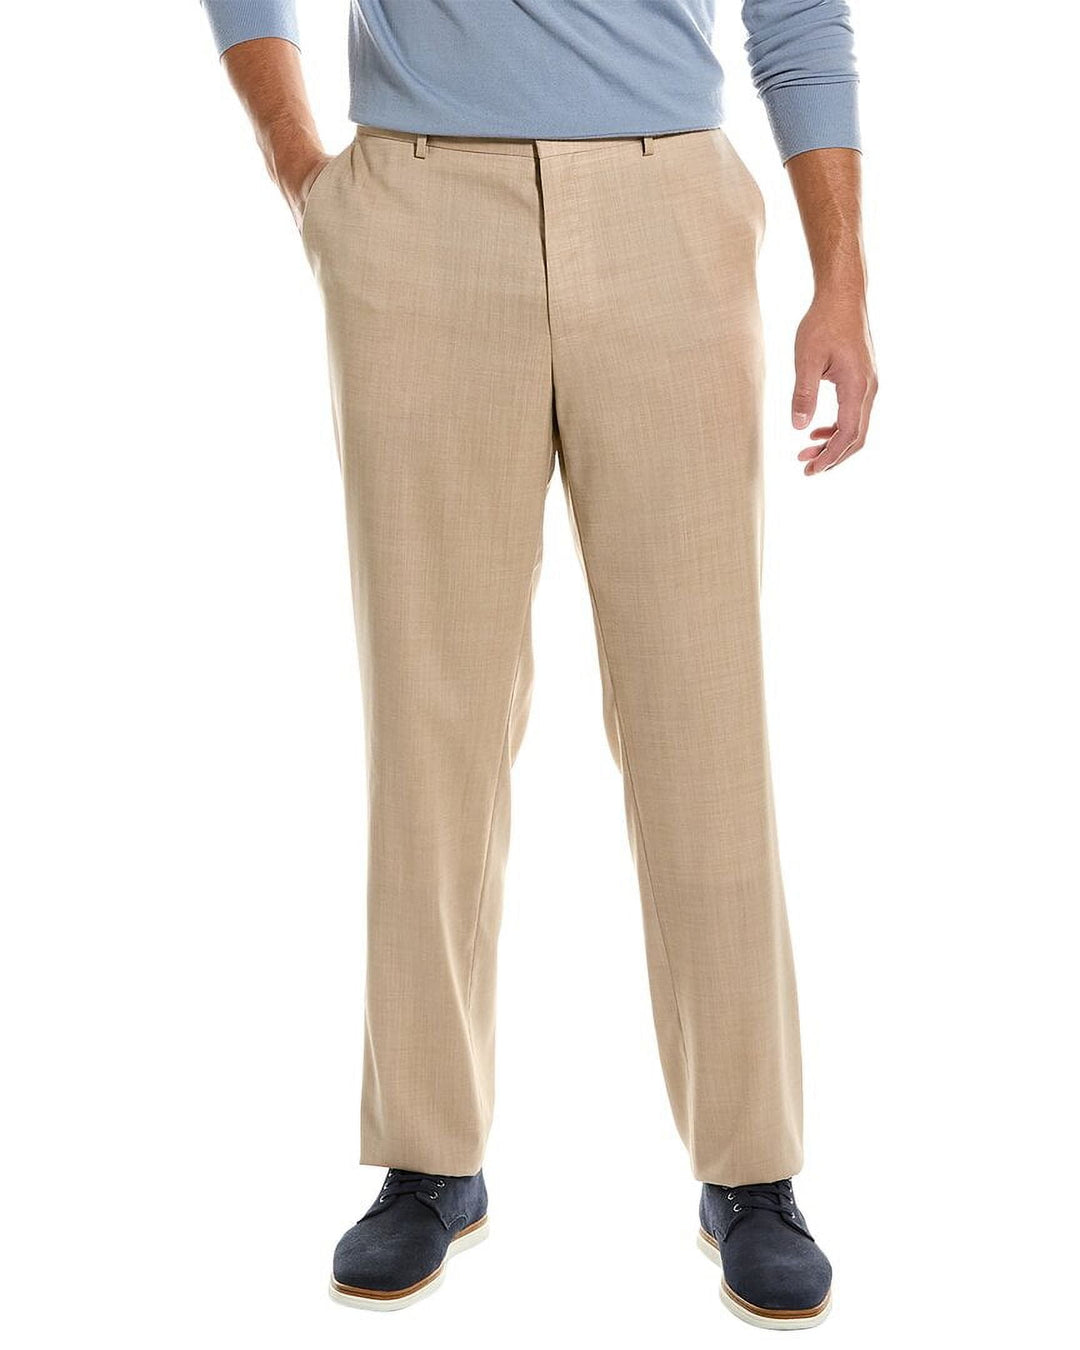 Hugo Boss Men's Modern Fit Solid Suit Pants Brown Size 32